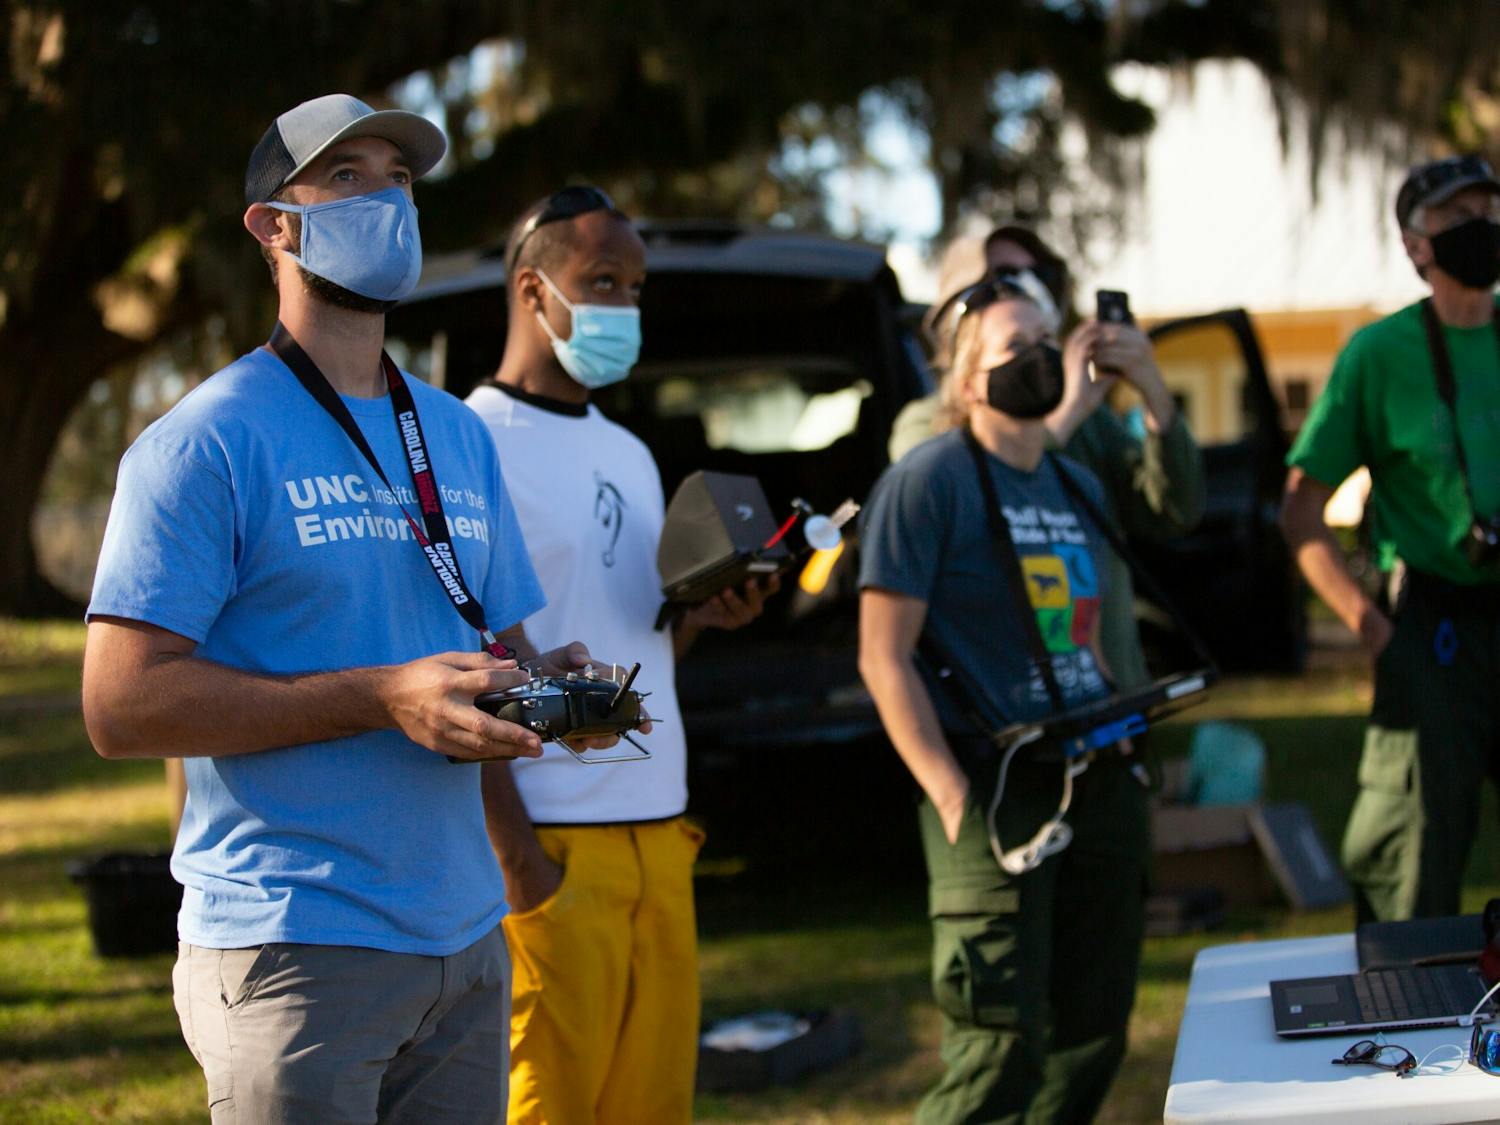 Troy Walton, lab manager for the Carolina Drone Lab, controls a drone. Photo courtesy of Peggy Mullin/Carolina Drone Lab.